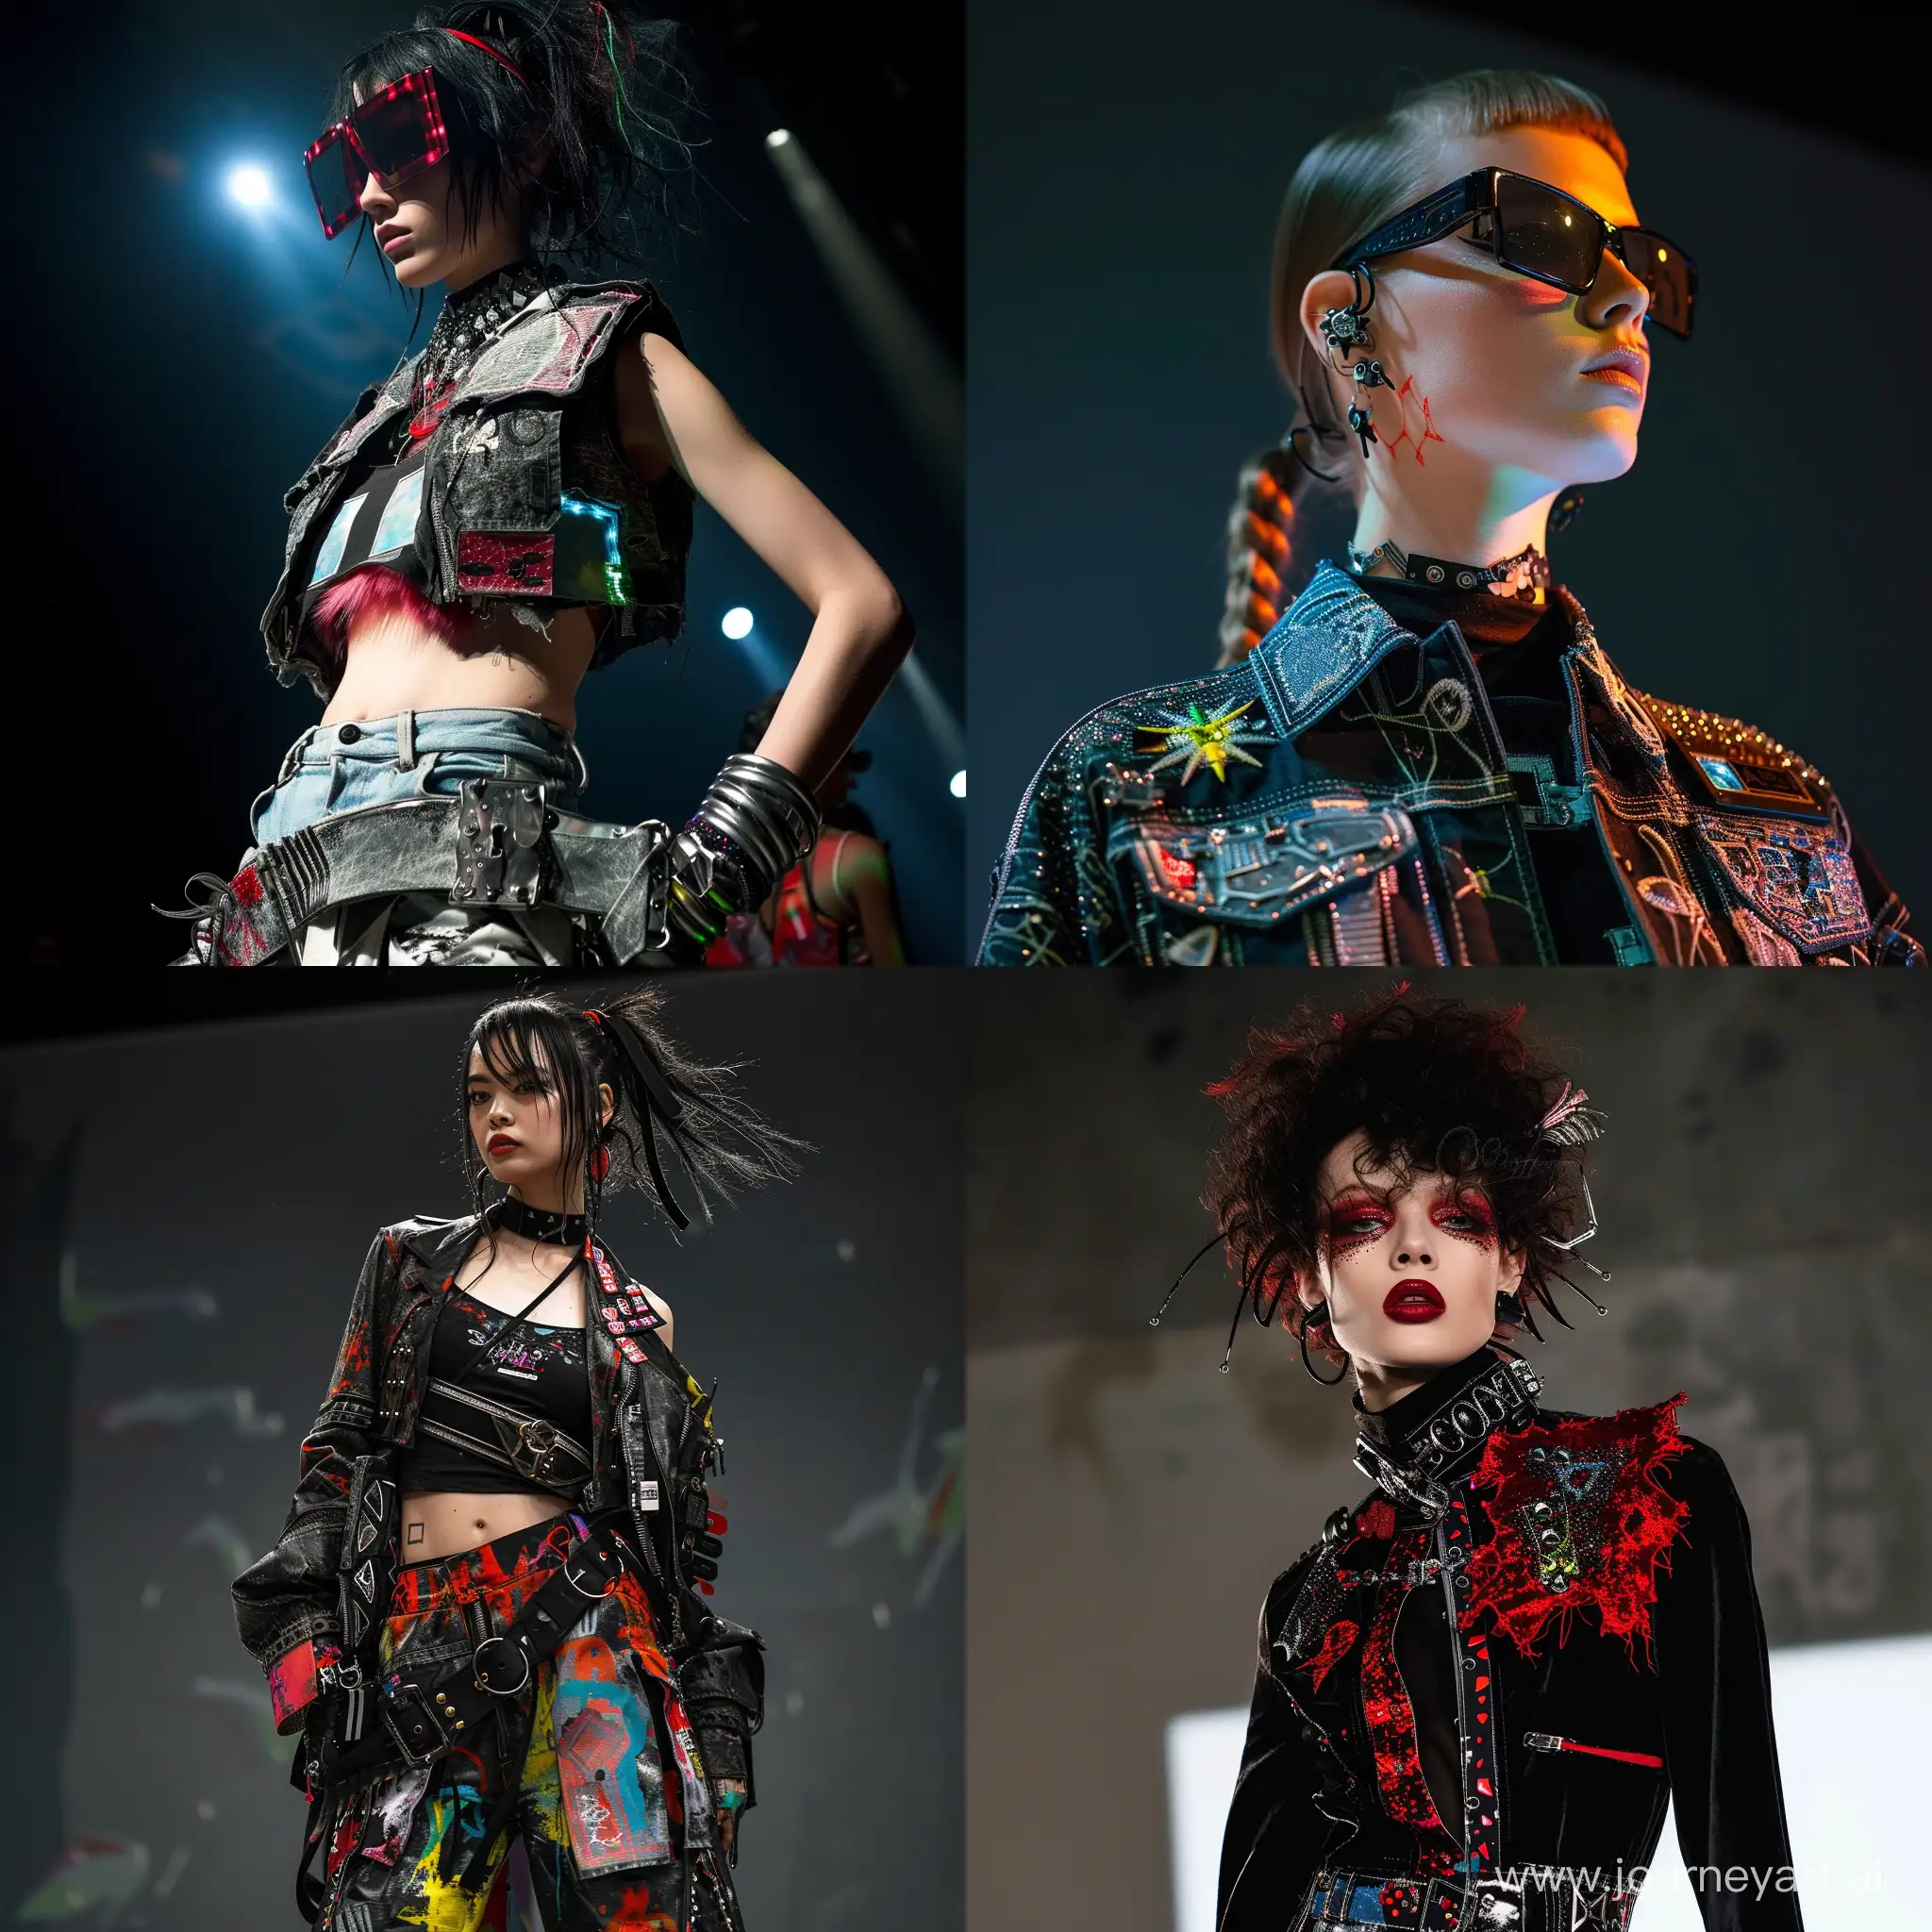 Futuristic-Cyberpunk-Rock-Fashion-Show